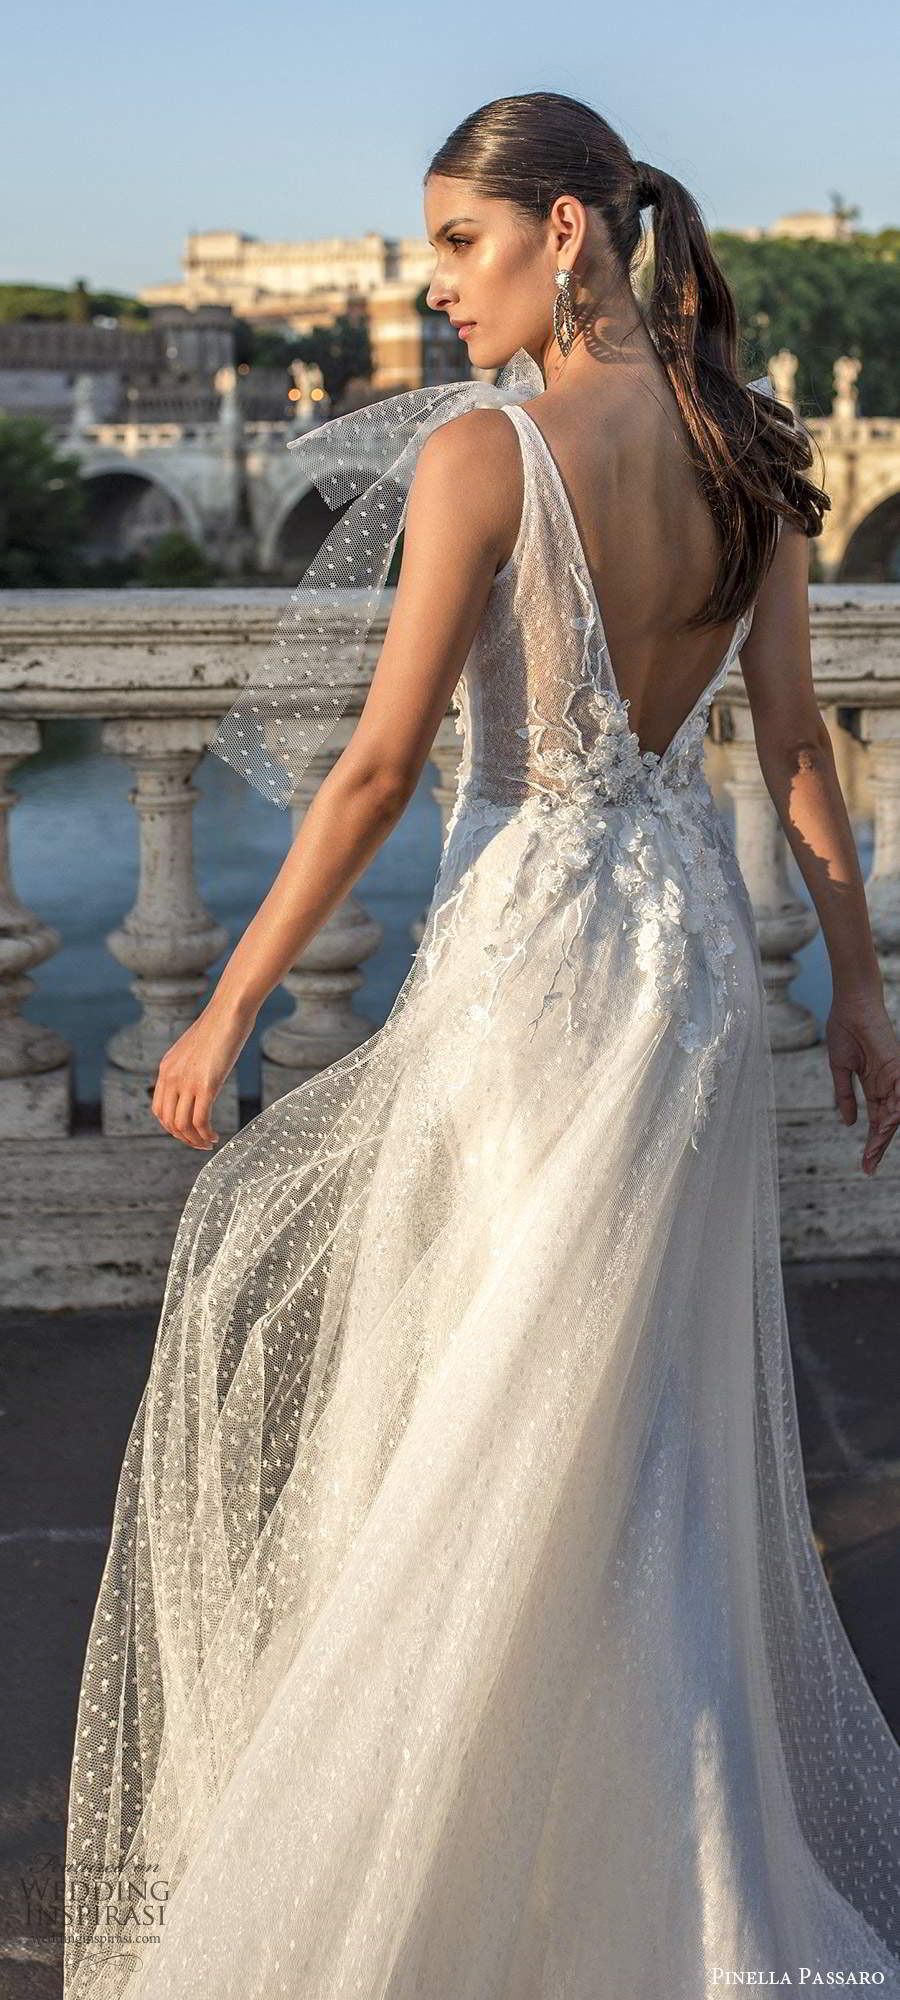 pinella passaro 2020 bridal sleeveless bow straps plunging v neckline fully embellished a line ball gown wedding dress slit skirt v back chapel train (8) bv